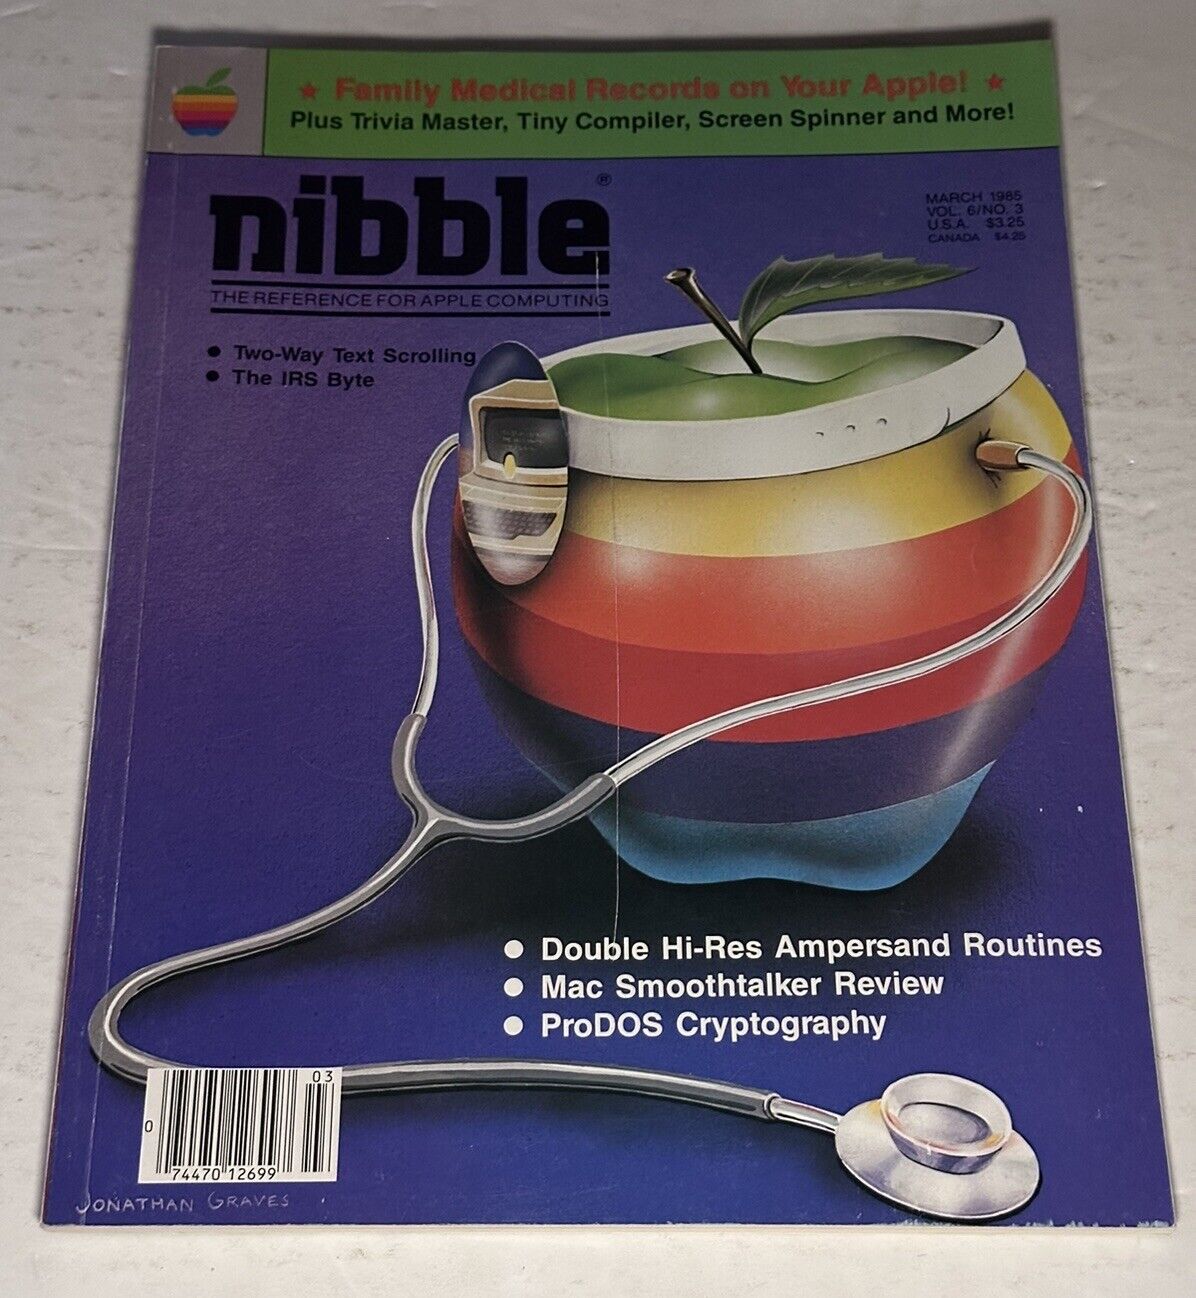 Vtg March 1985 Nibble Magazine Trivia Master Tiny Compiler Screen Spinner ProDOS